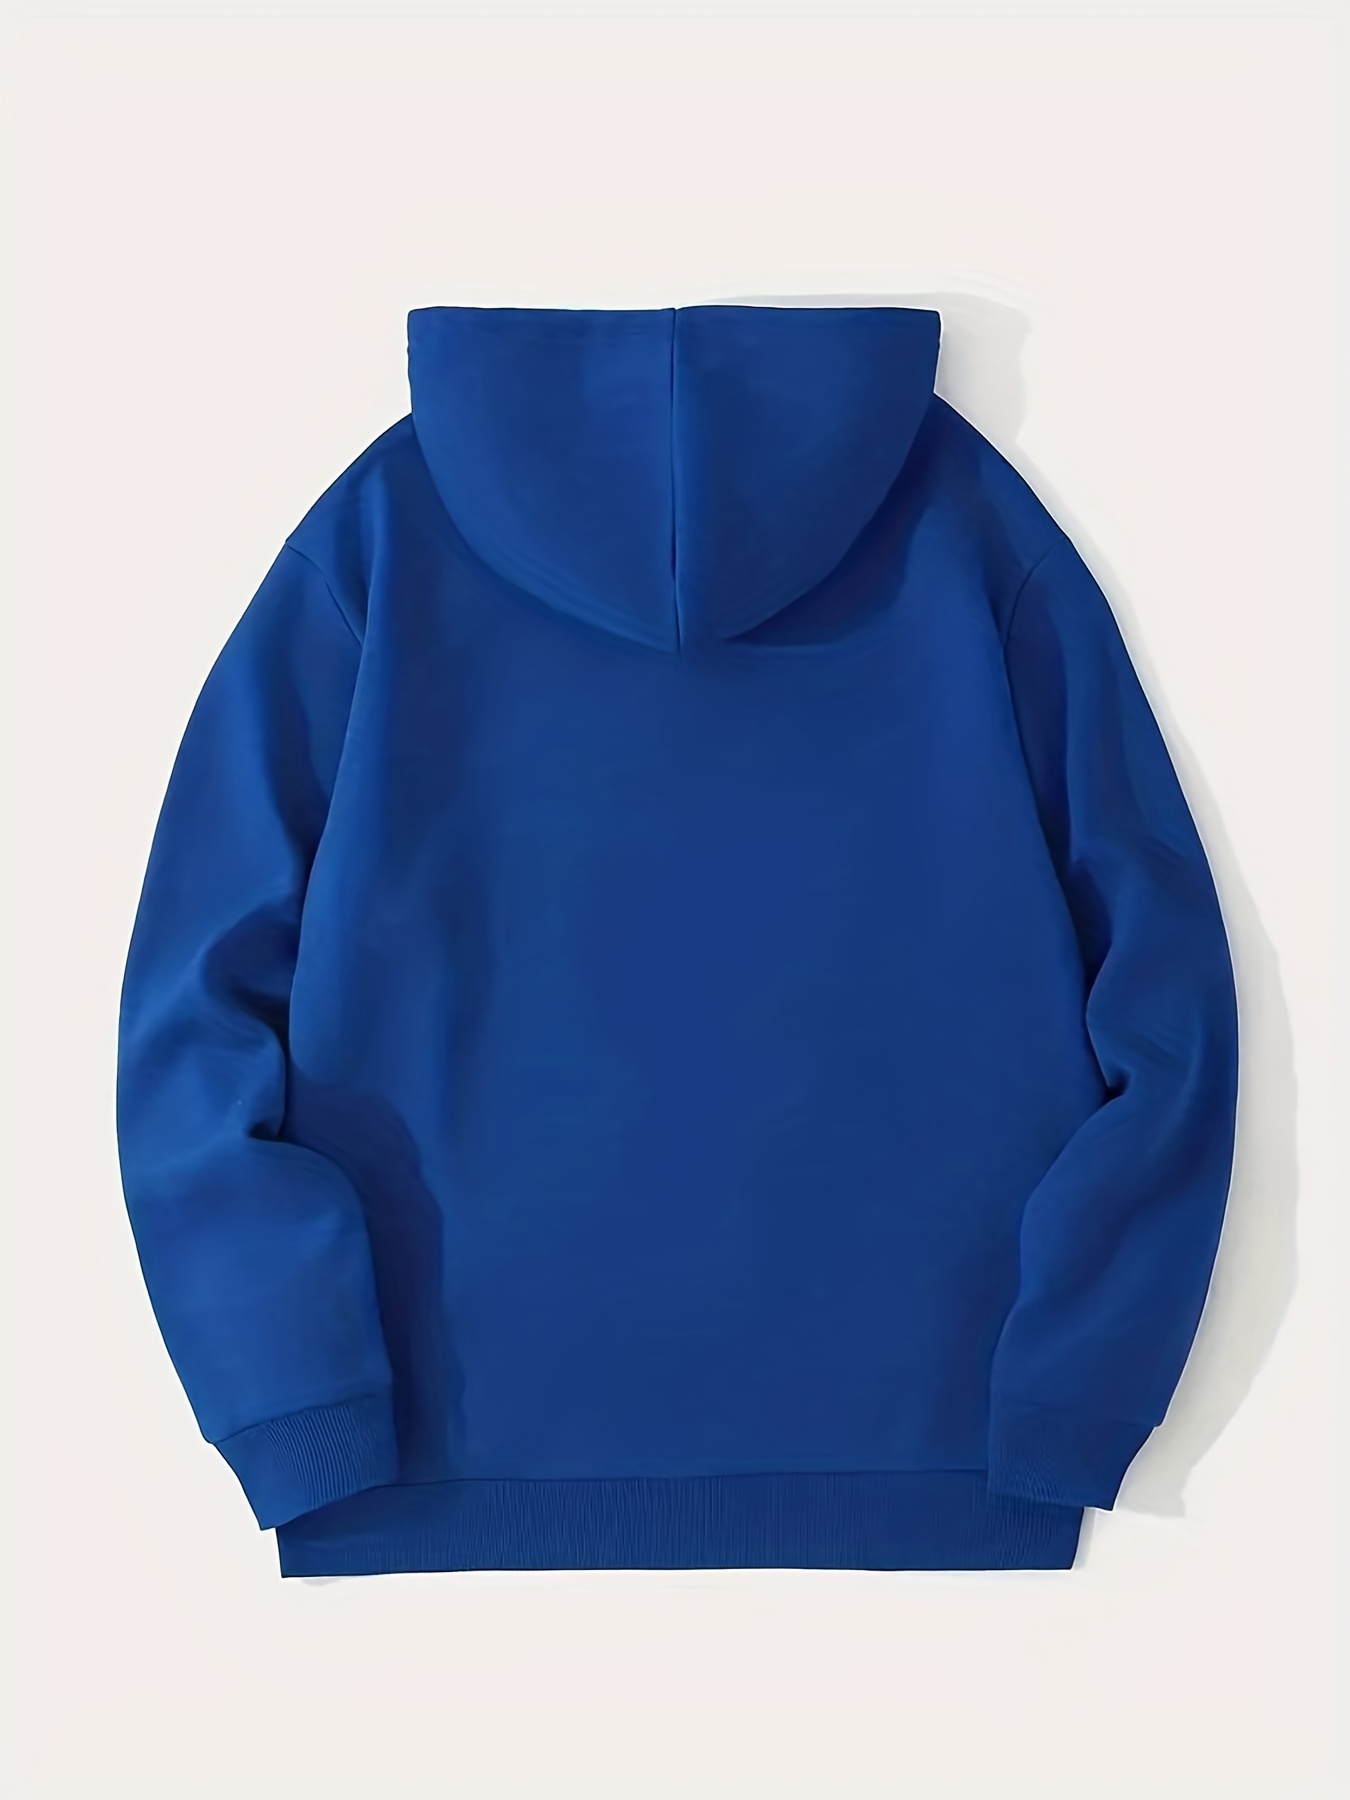 headphone smile print hoodie hoodies for men mens casual graphic design pullover hooded sweatshirt with kangaroo pocket streetwear for winter fall as gifts details 6